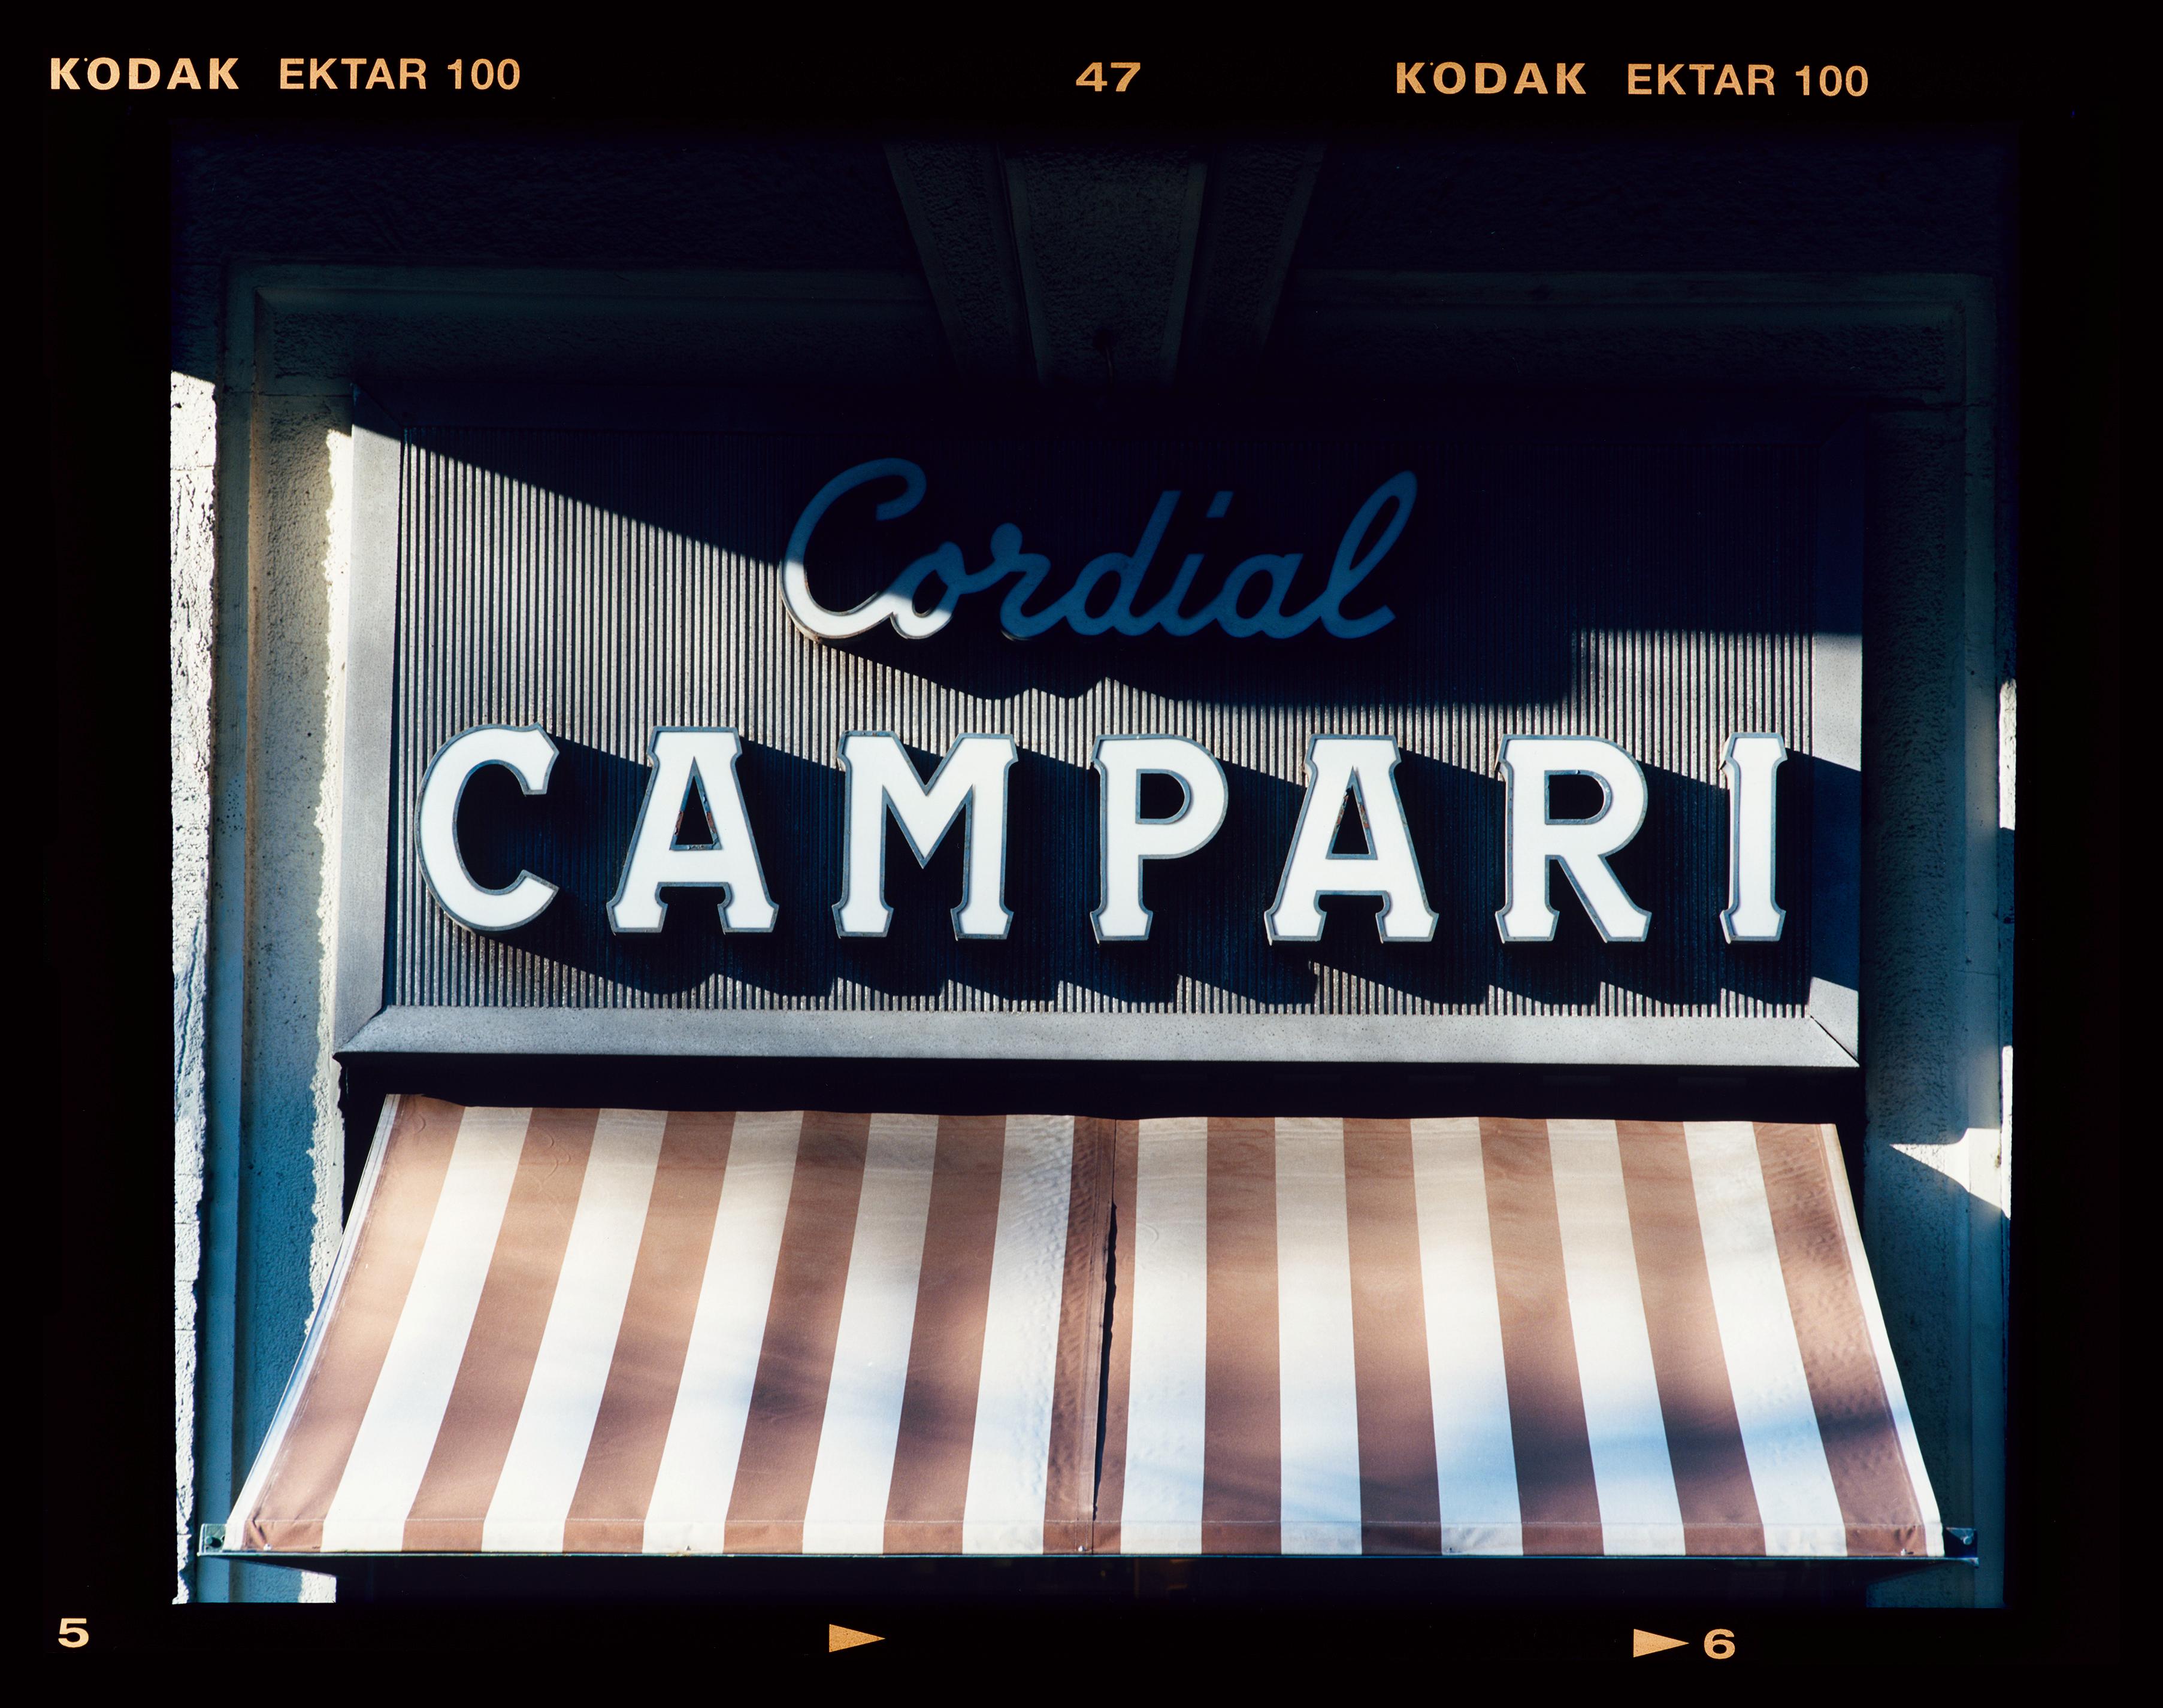 Richard Heeps Print – Cordial Campari, Mailand – Architektur-Farbfotografie